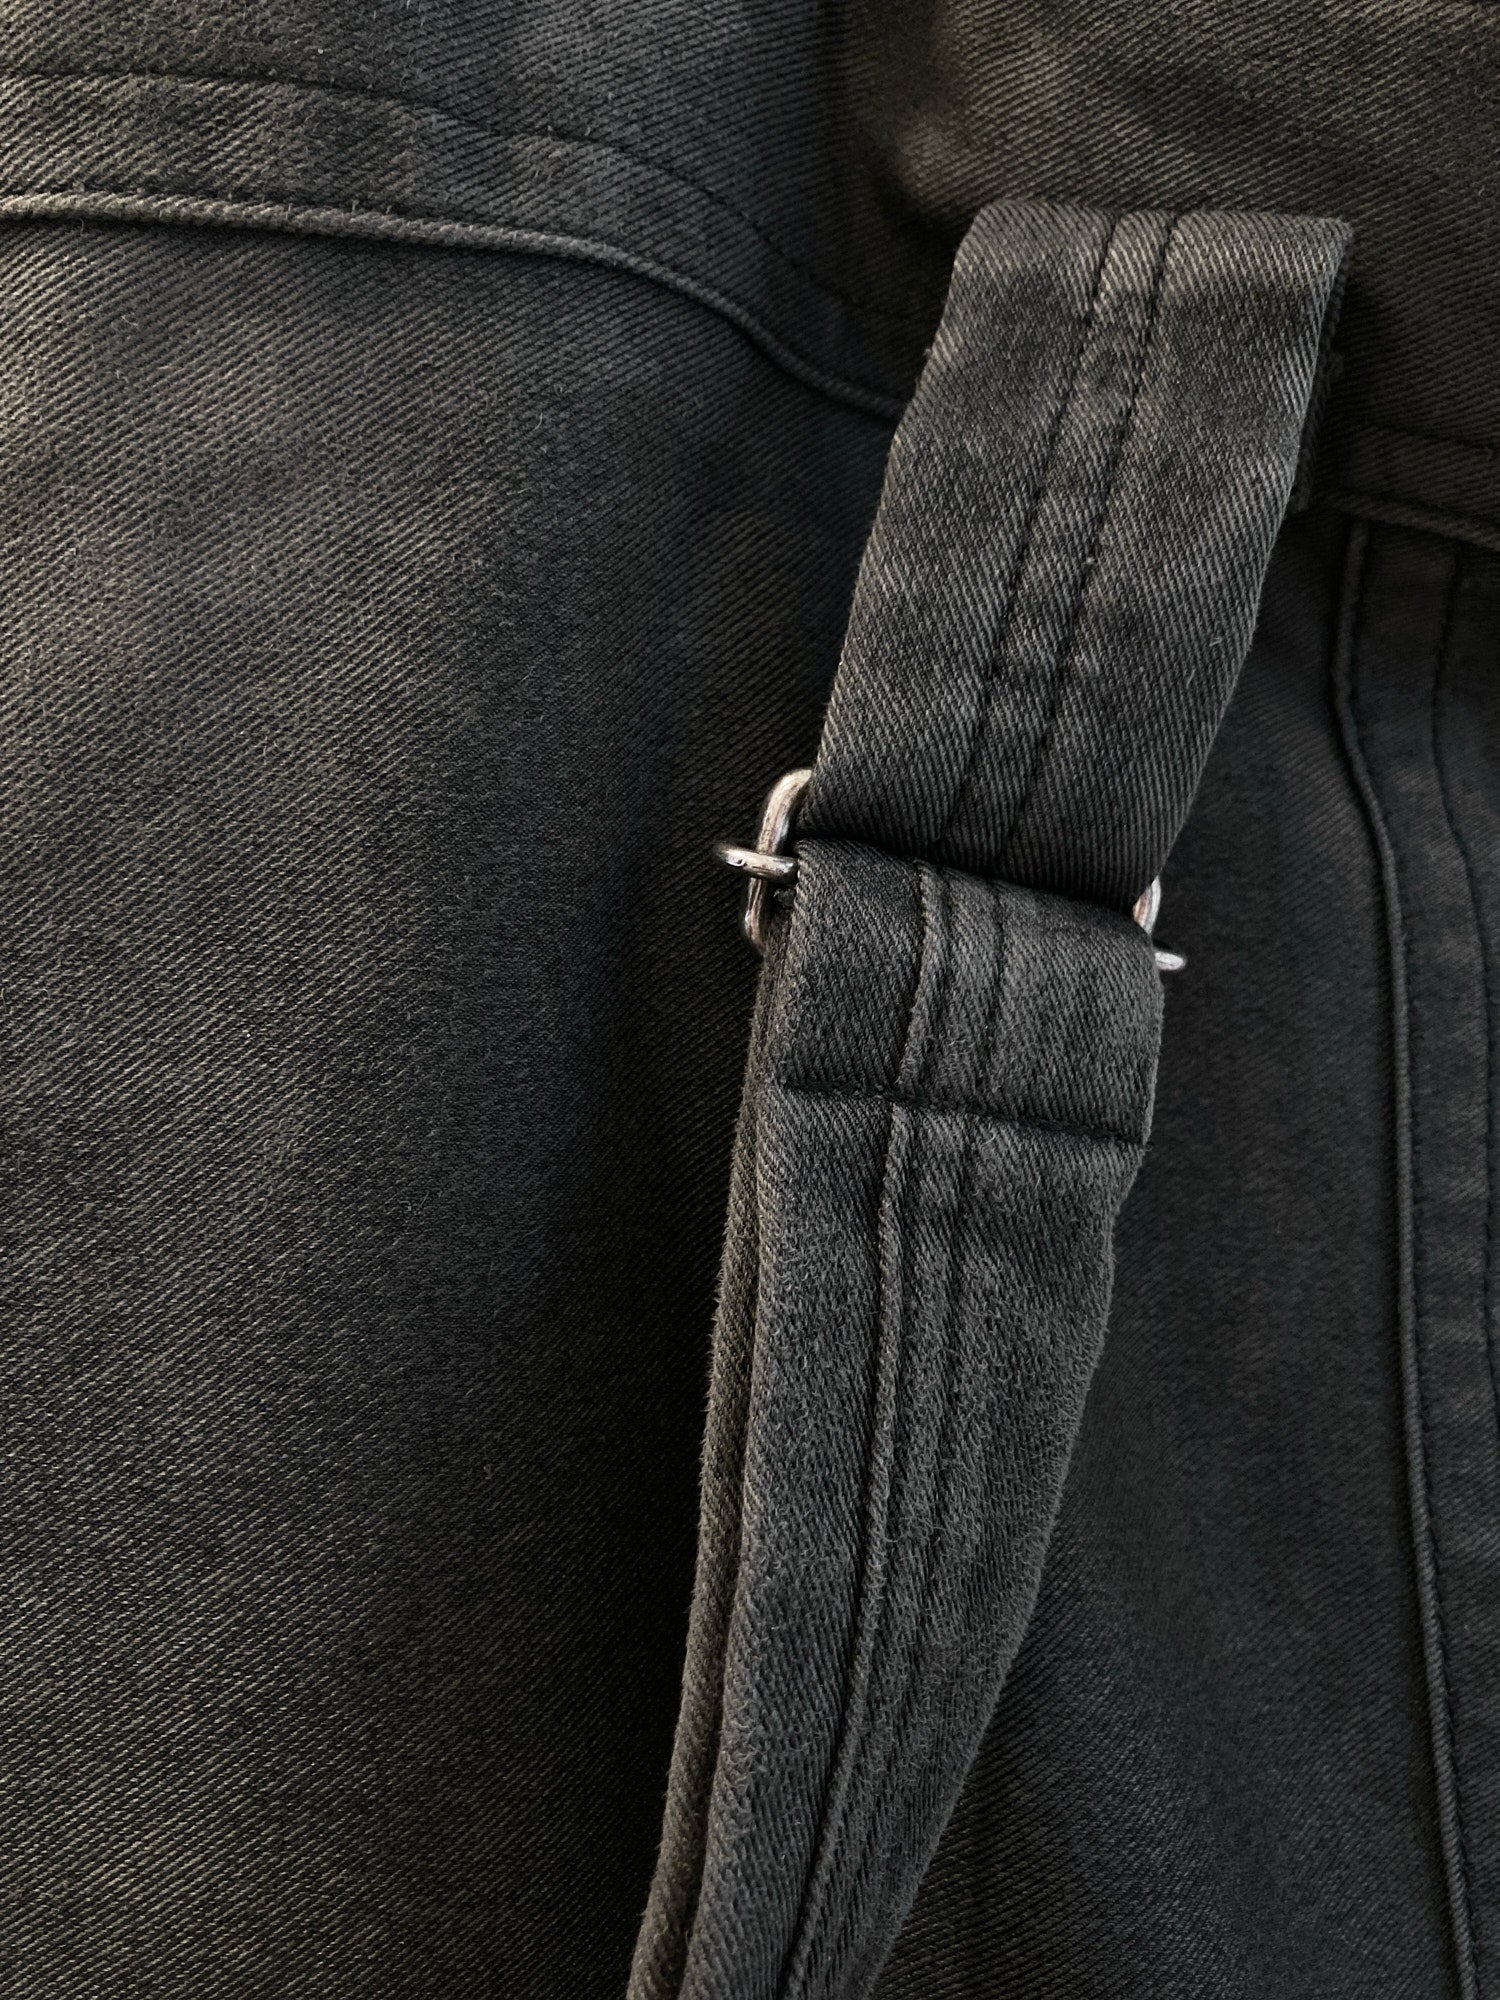 Jean Colonna large dark grey twill fabric multi zip tote bag